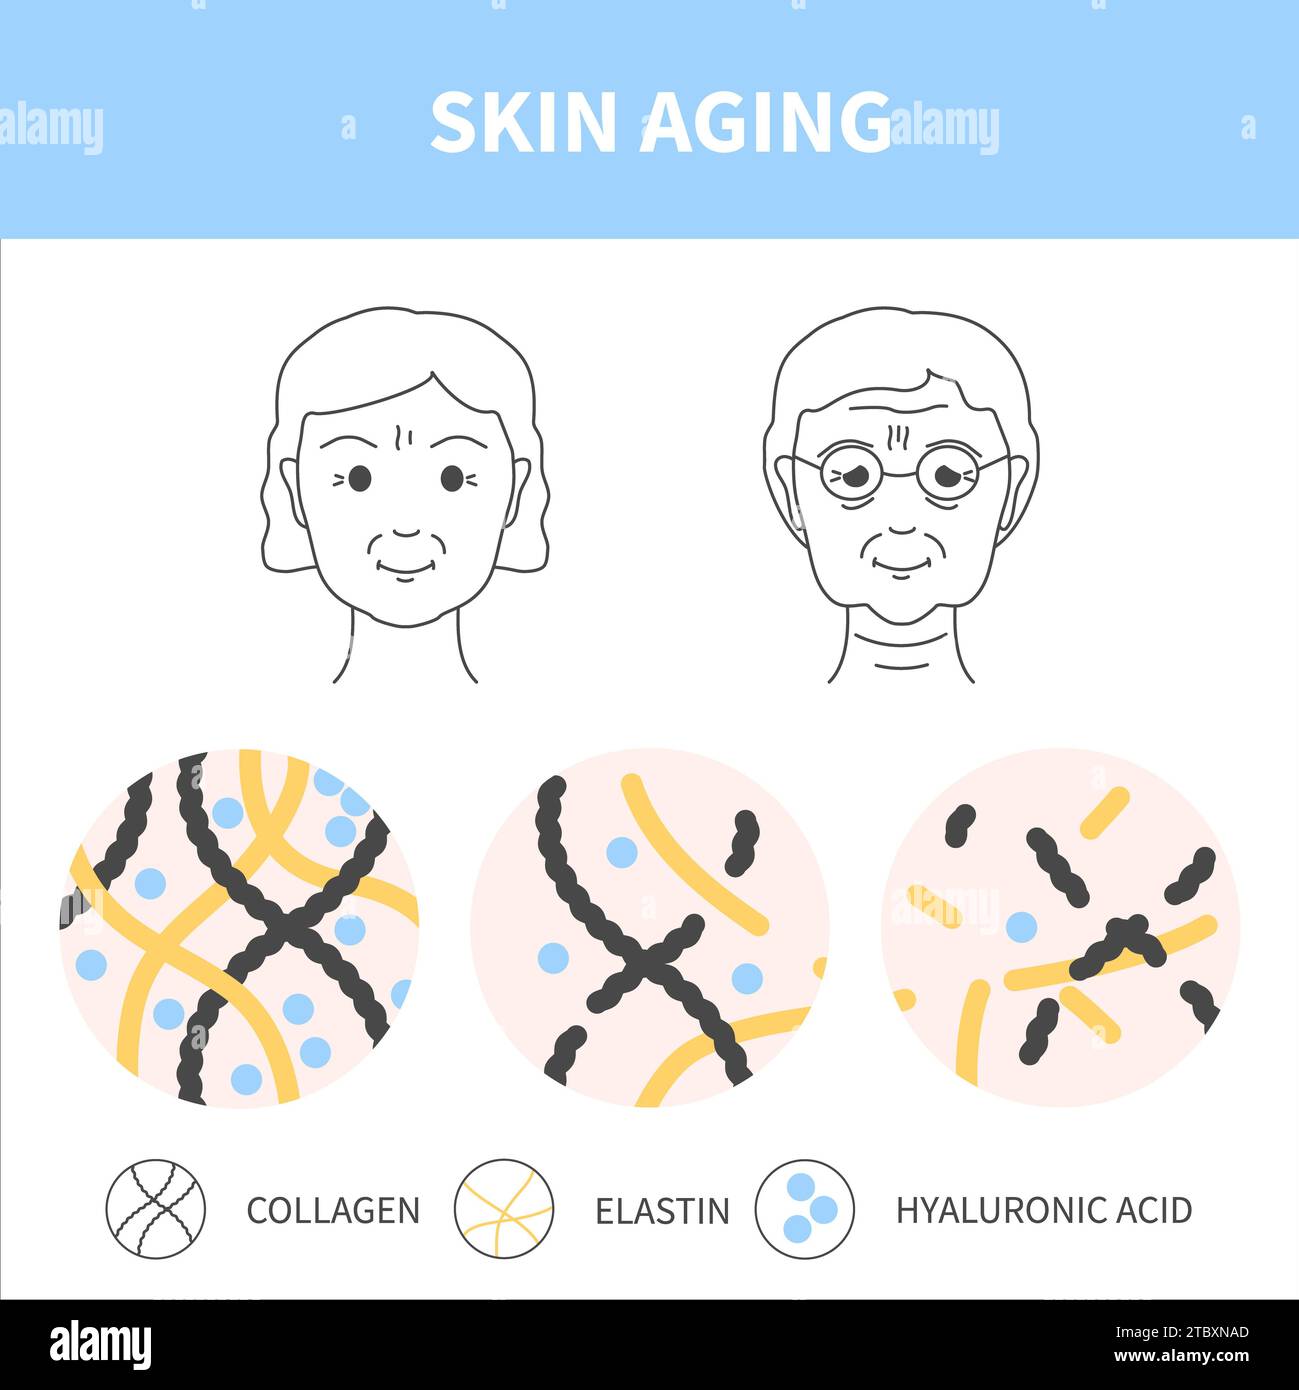 Skin aging, conceptual illustration Stock Photo